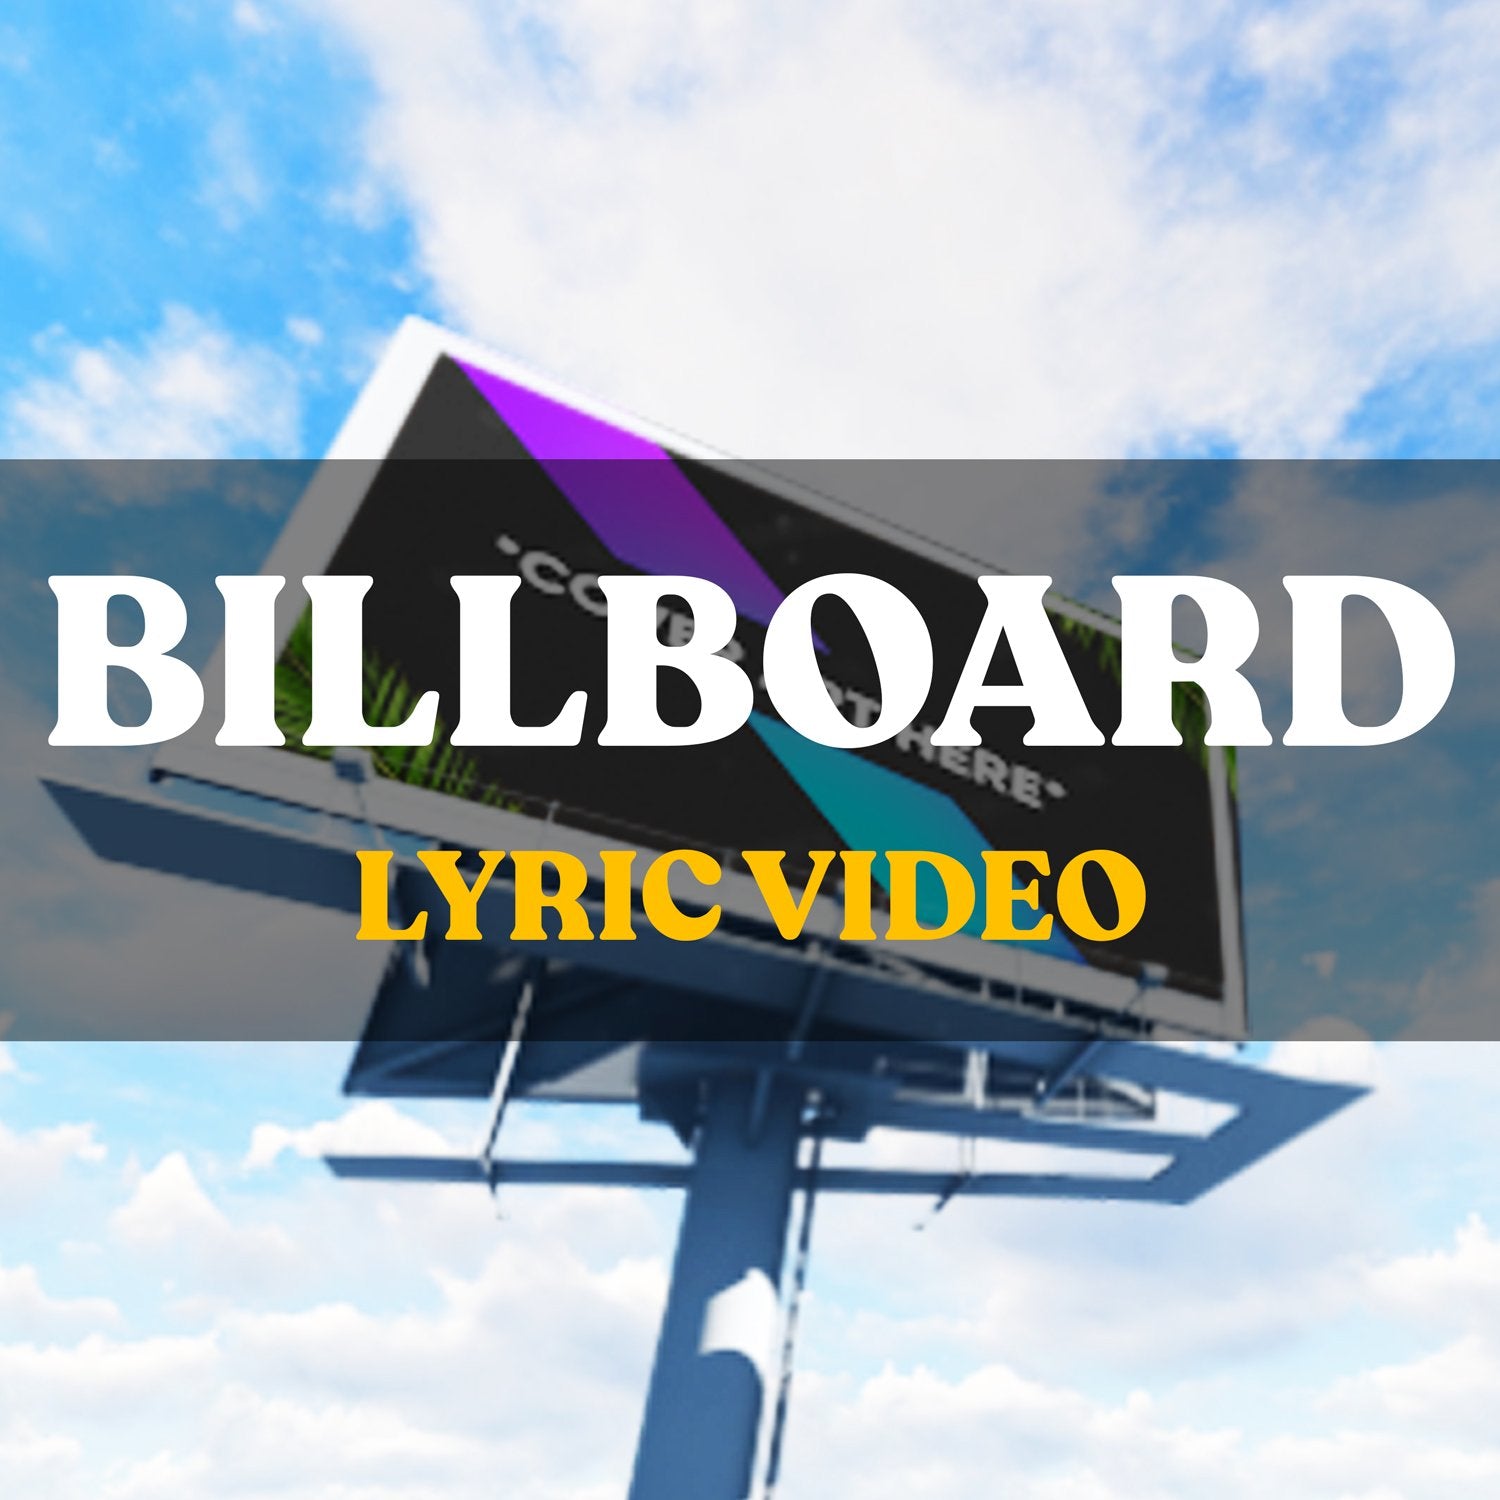 Billboard premade lyric video